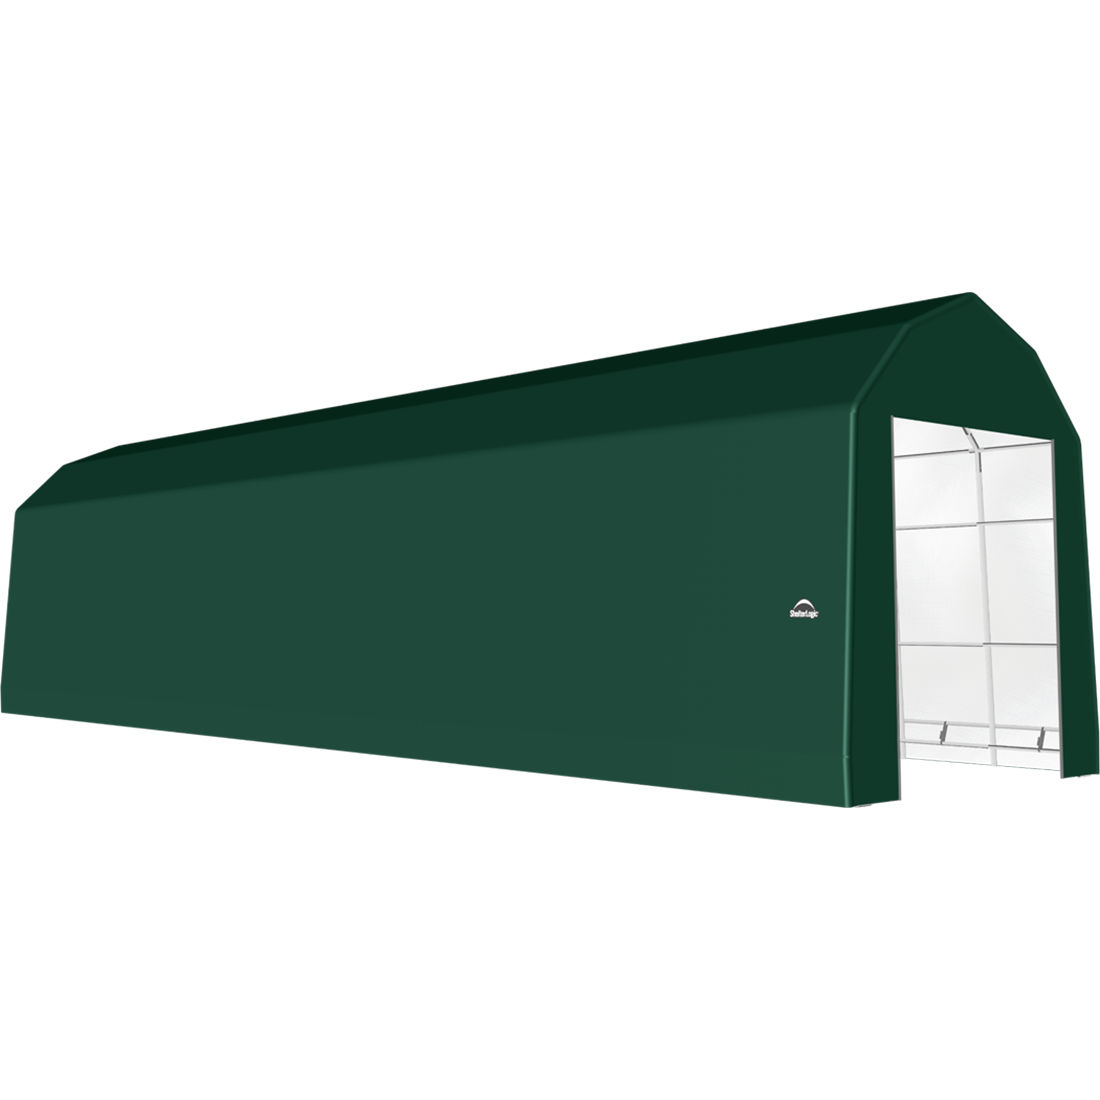 ShelterTech SP Series Barn Shelter, 15 ft. x 68 ft. x 17 ft. Heavy Duty PVC 14.5 oz. Green